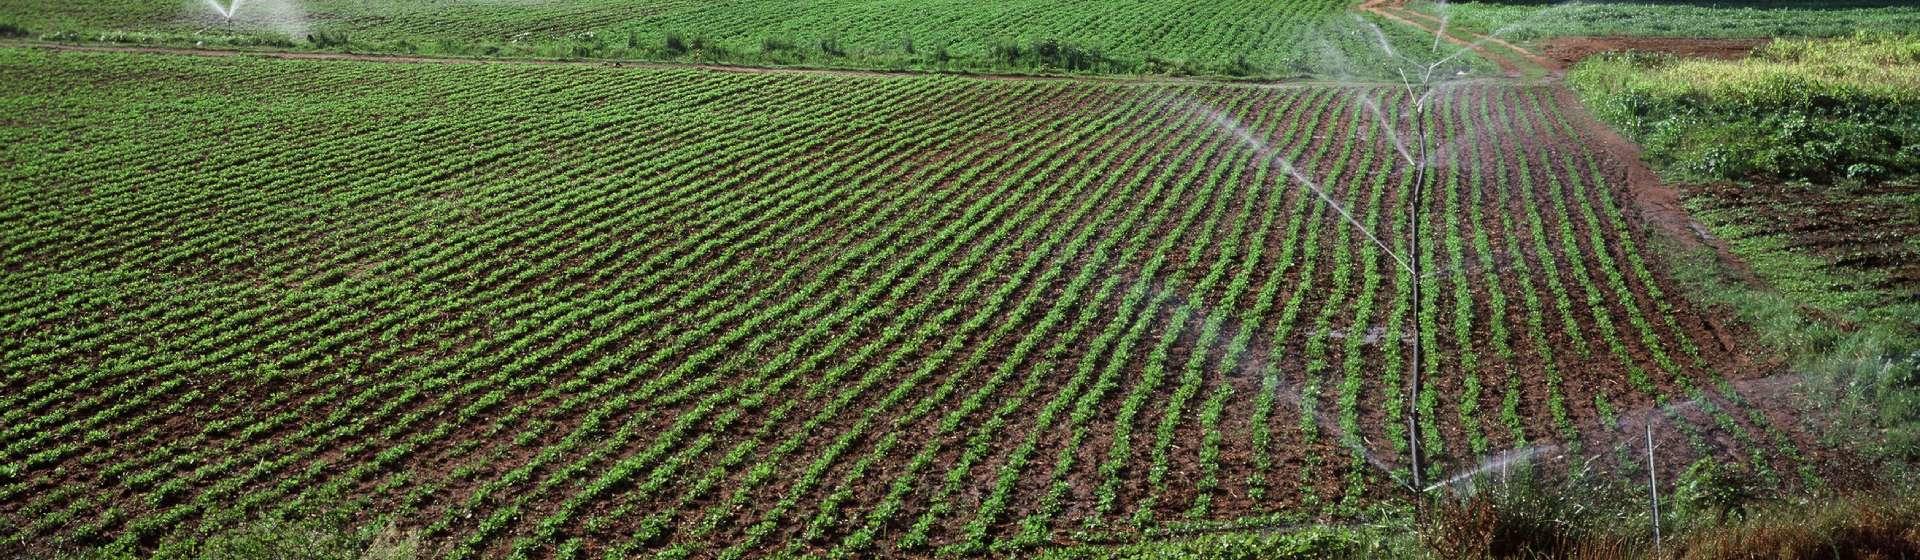 irrigation de terres agricoles